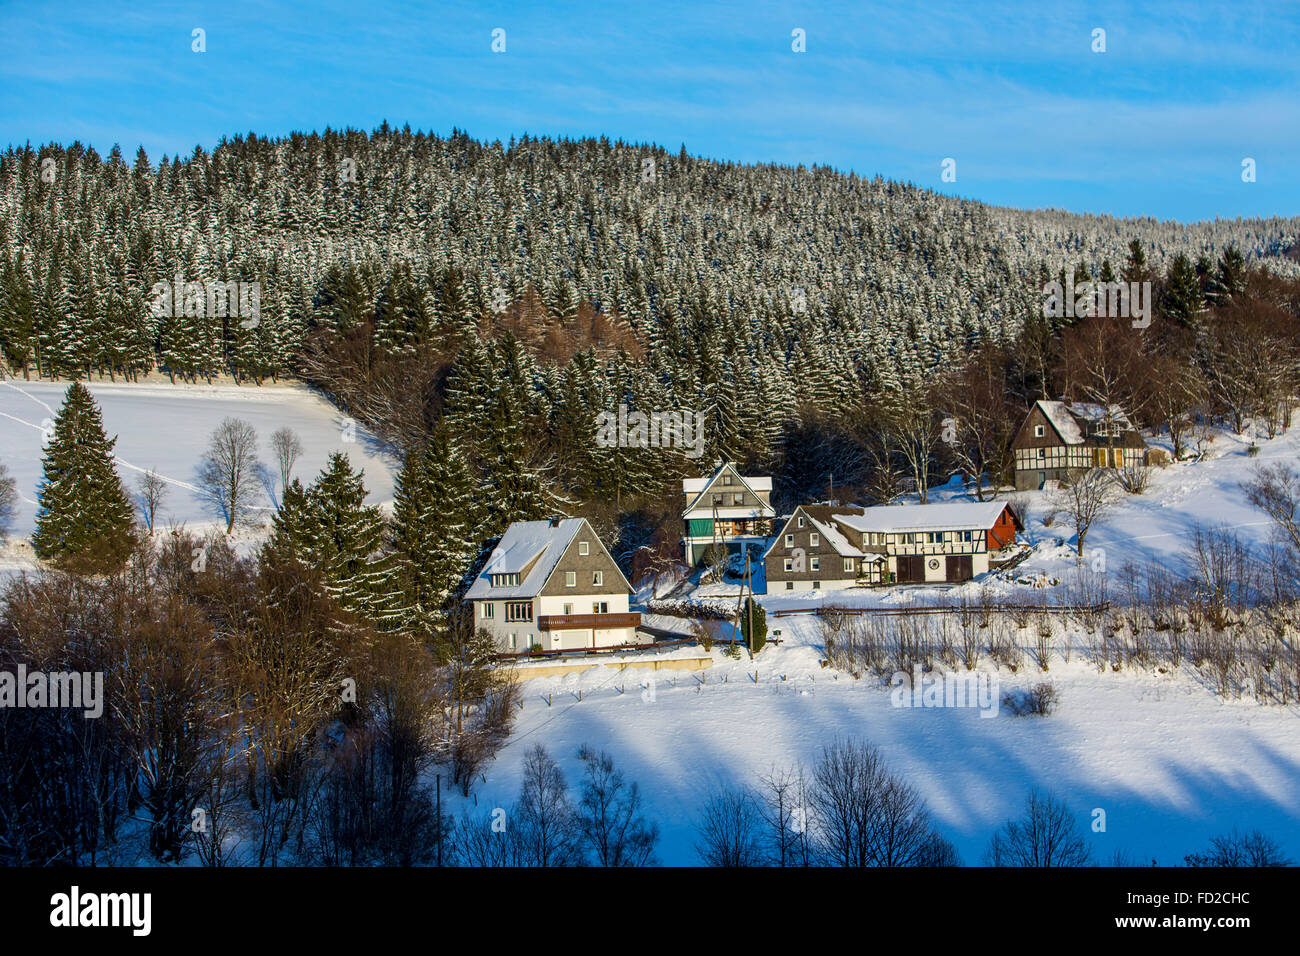 Winter, snowy landscape, village Nordenau in the Sauerland area, Germany, Stock Photo